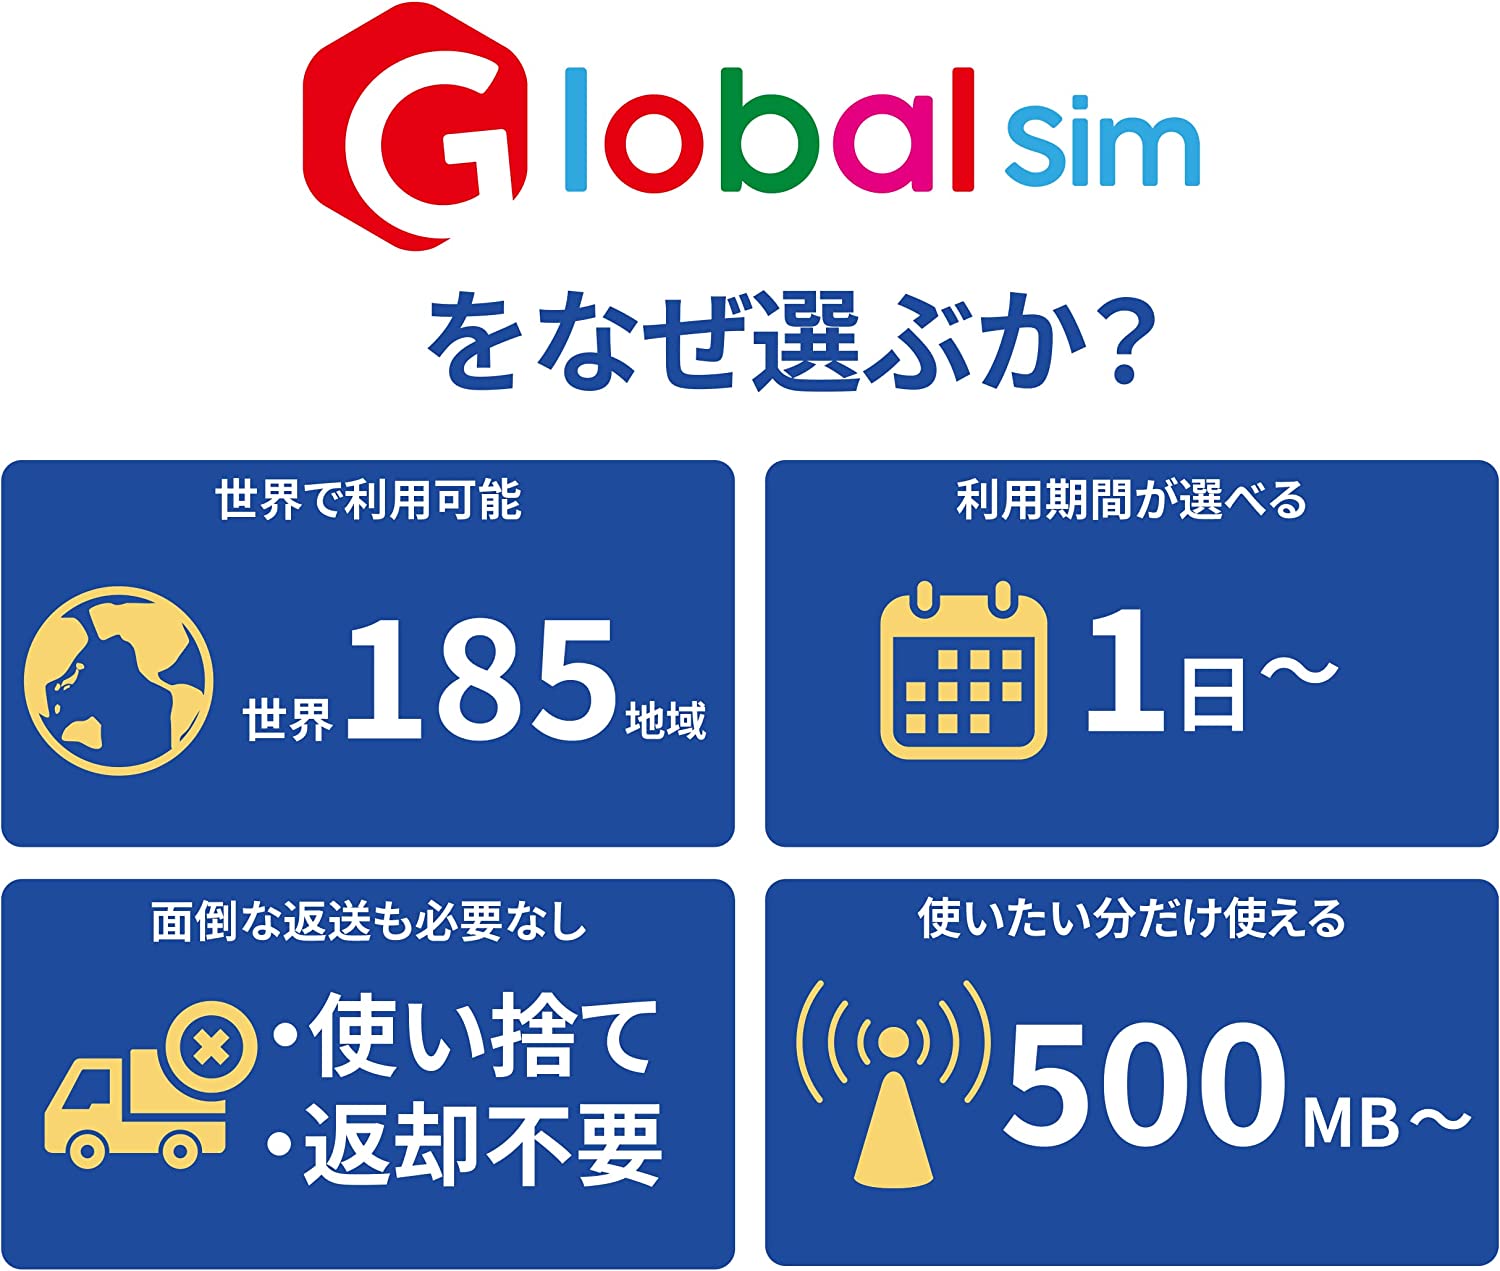 GLOBAL SIM 台湾 台北 3日間 データ無制限 (2GB 日高速）（容量を使い切っても利用期間内は最大384kbps） データ通信専用 シムフリー端末のみ対応 追加費用なし・契約不要